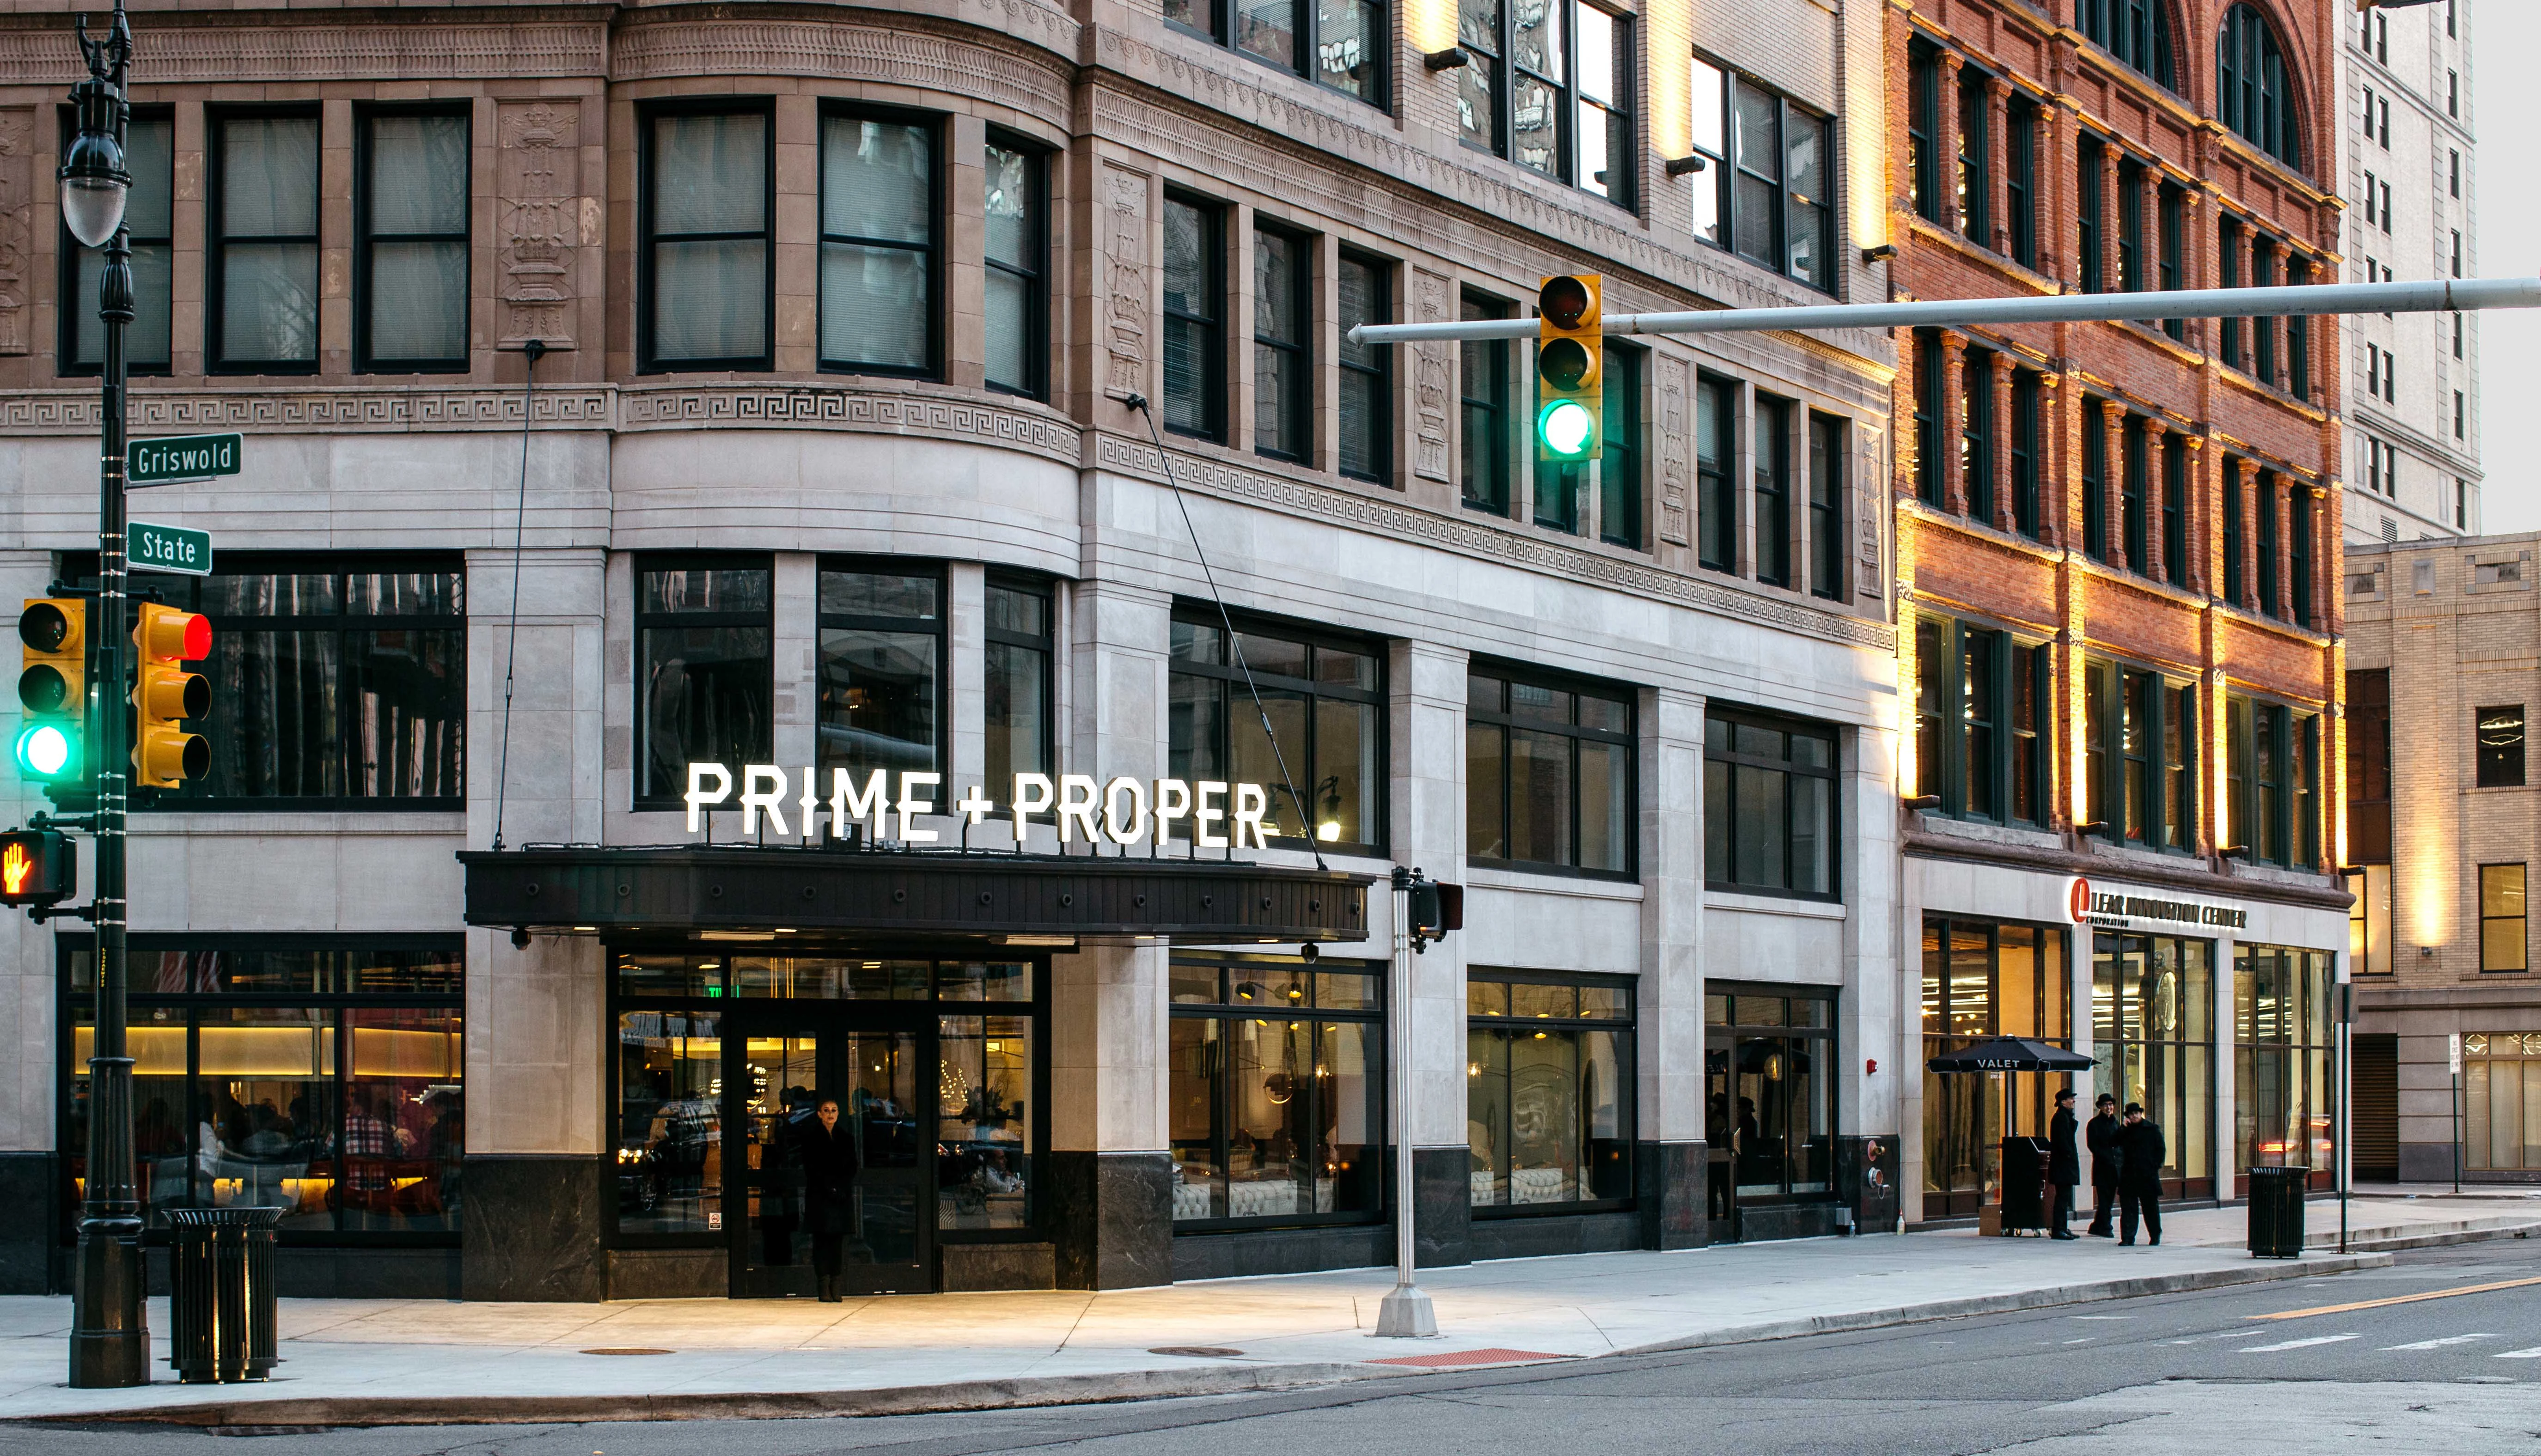 Prime and Proper Restaurant Detroit